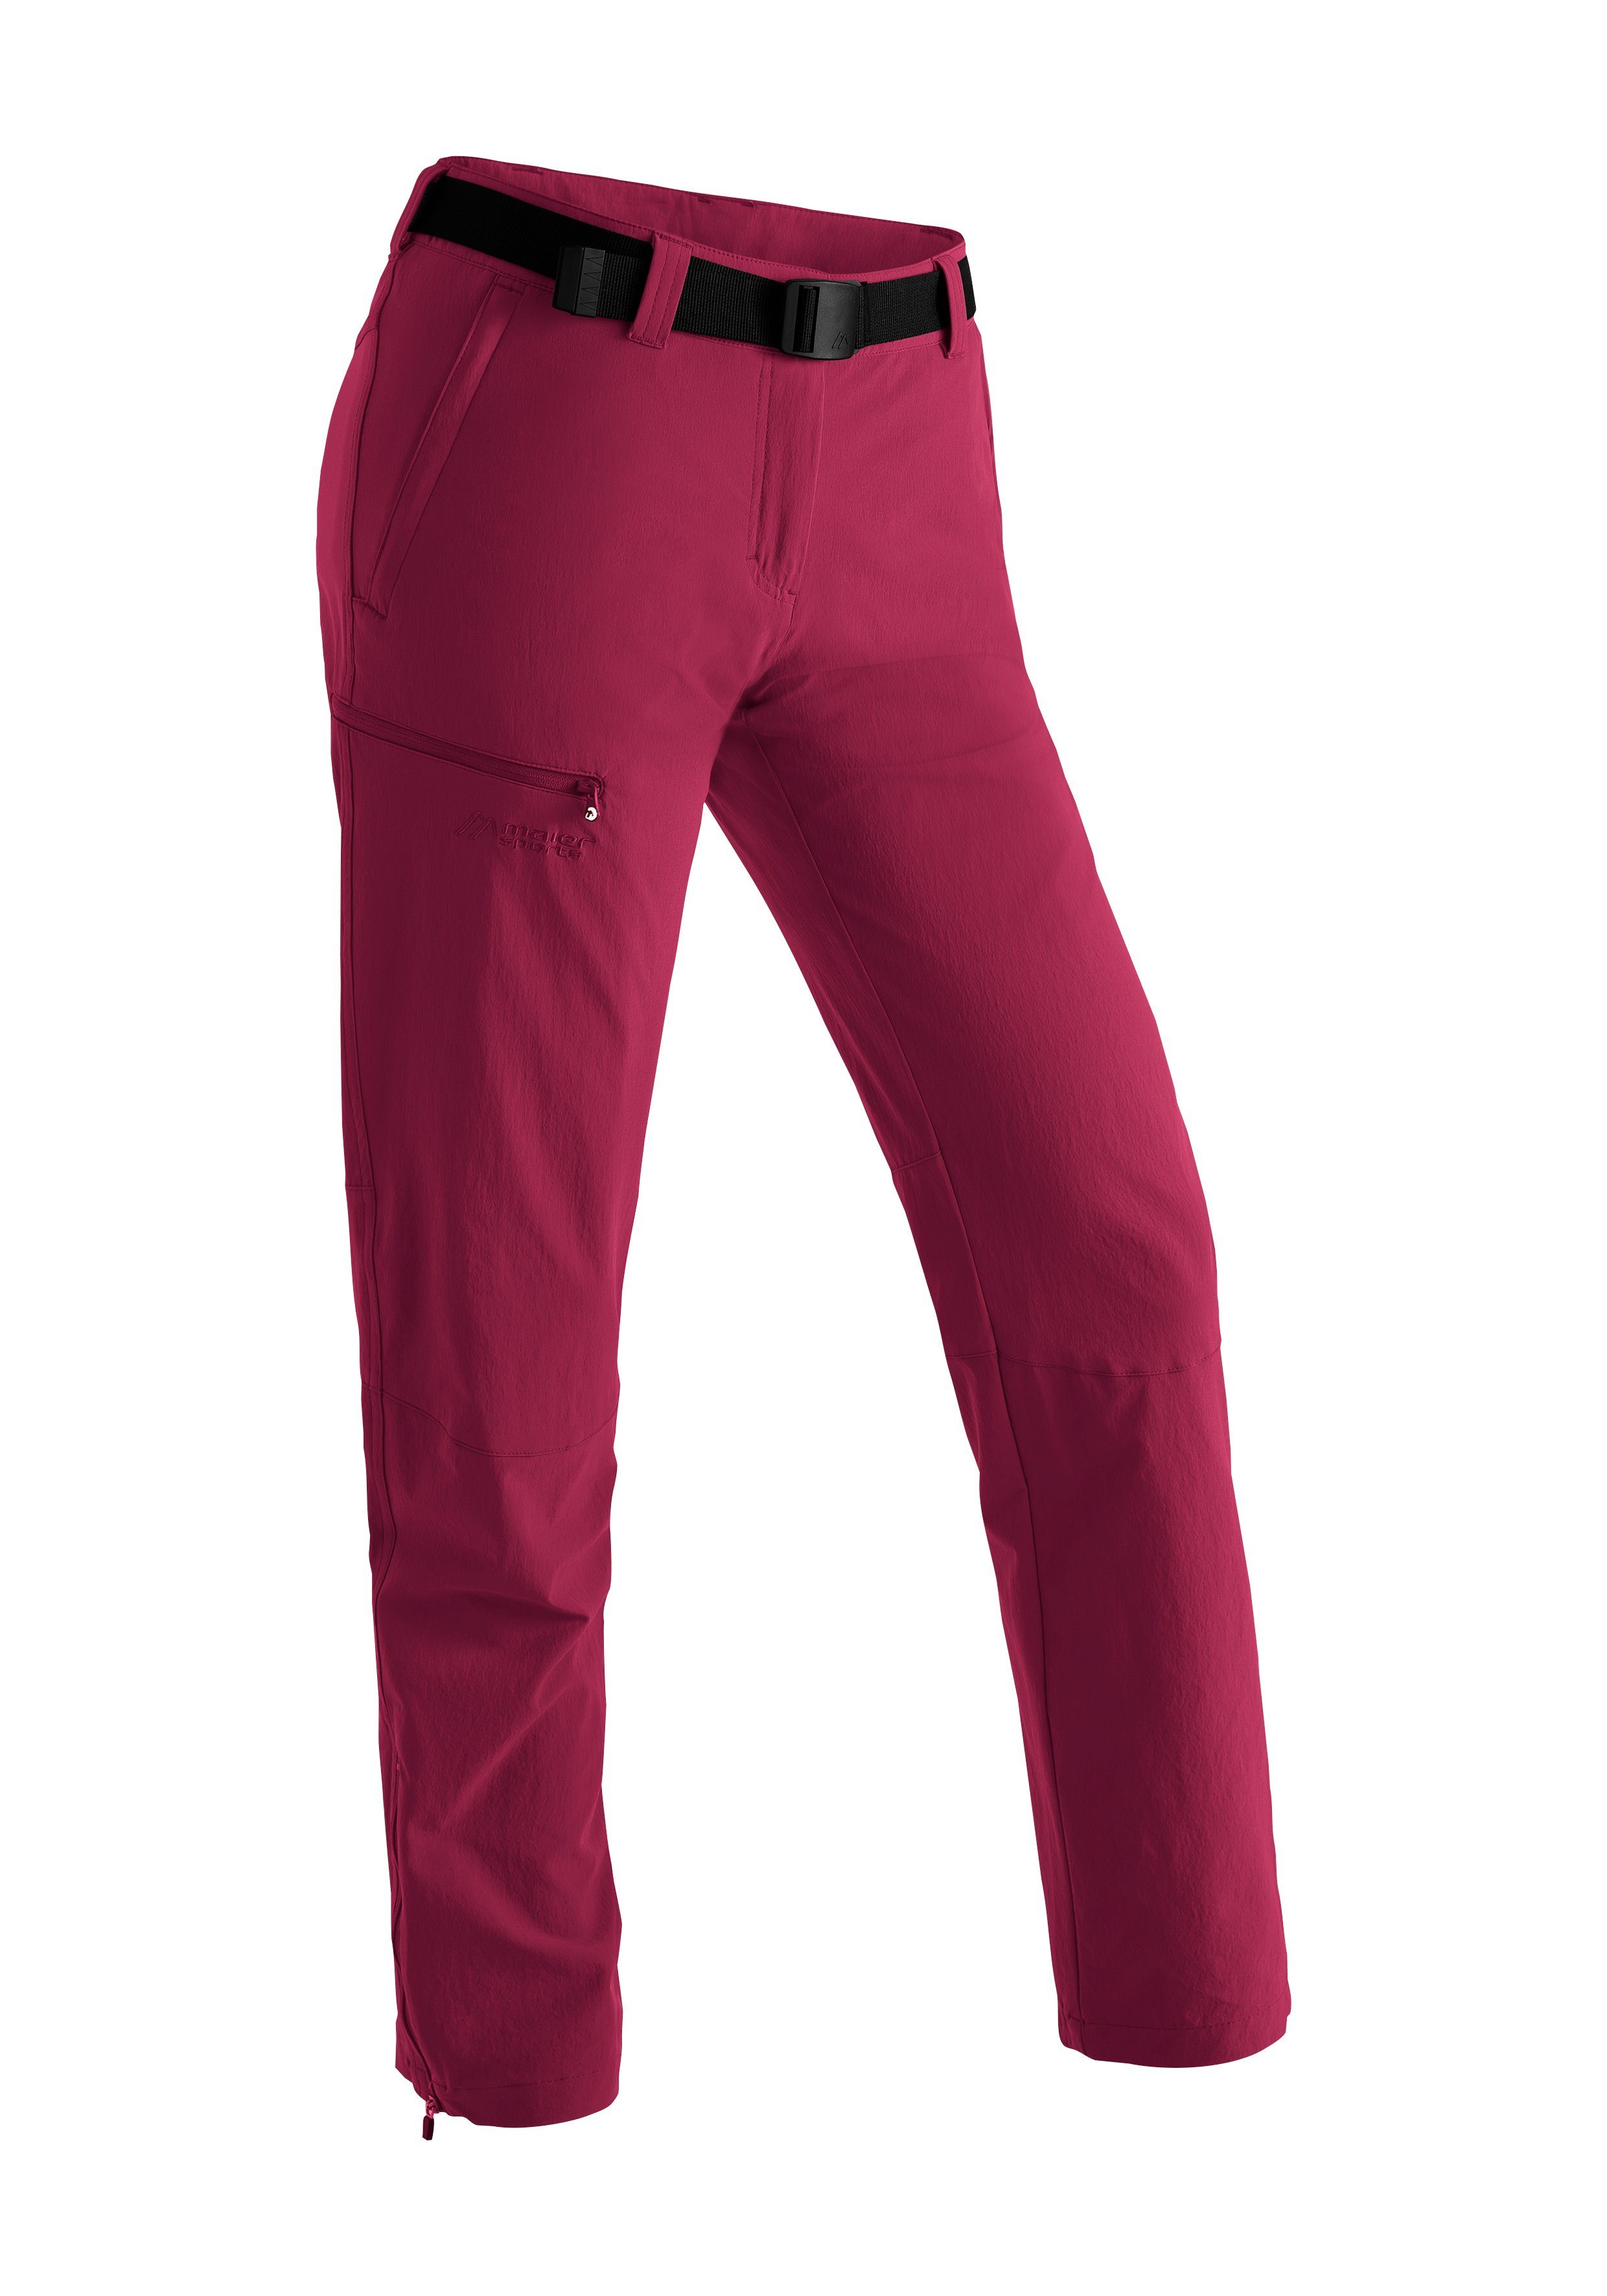 Sports Damen Outdoor-Hose Inara Material Maier purpurrot Wanderhose, slim Funktionshose aus elastischem